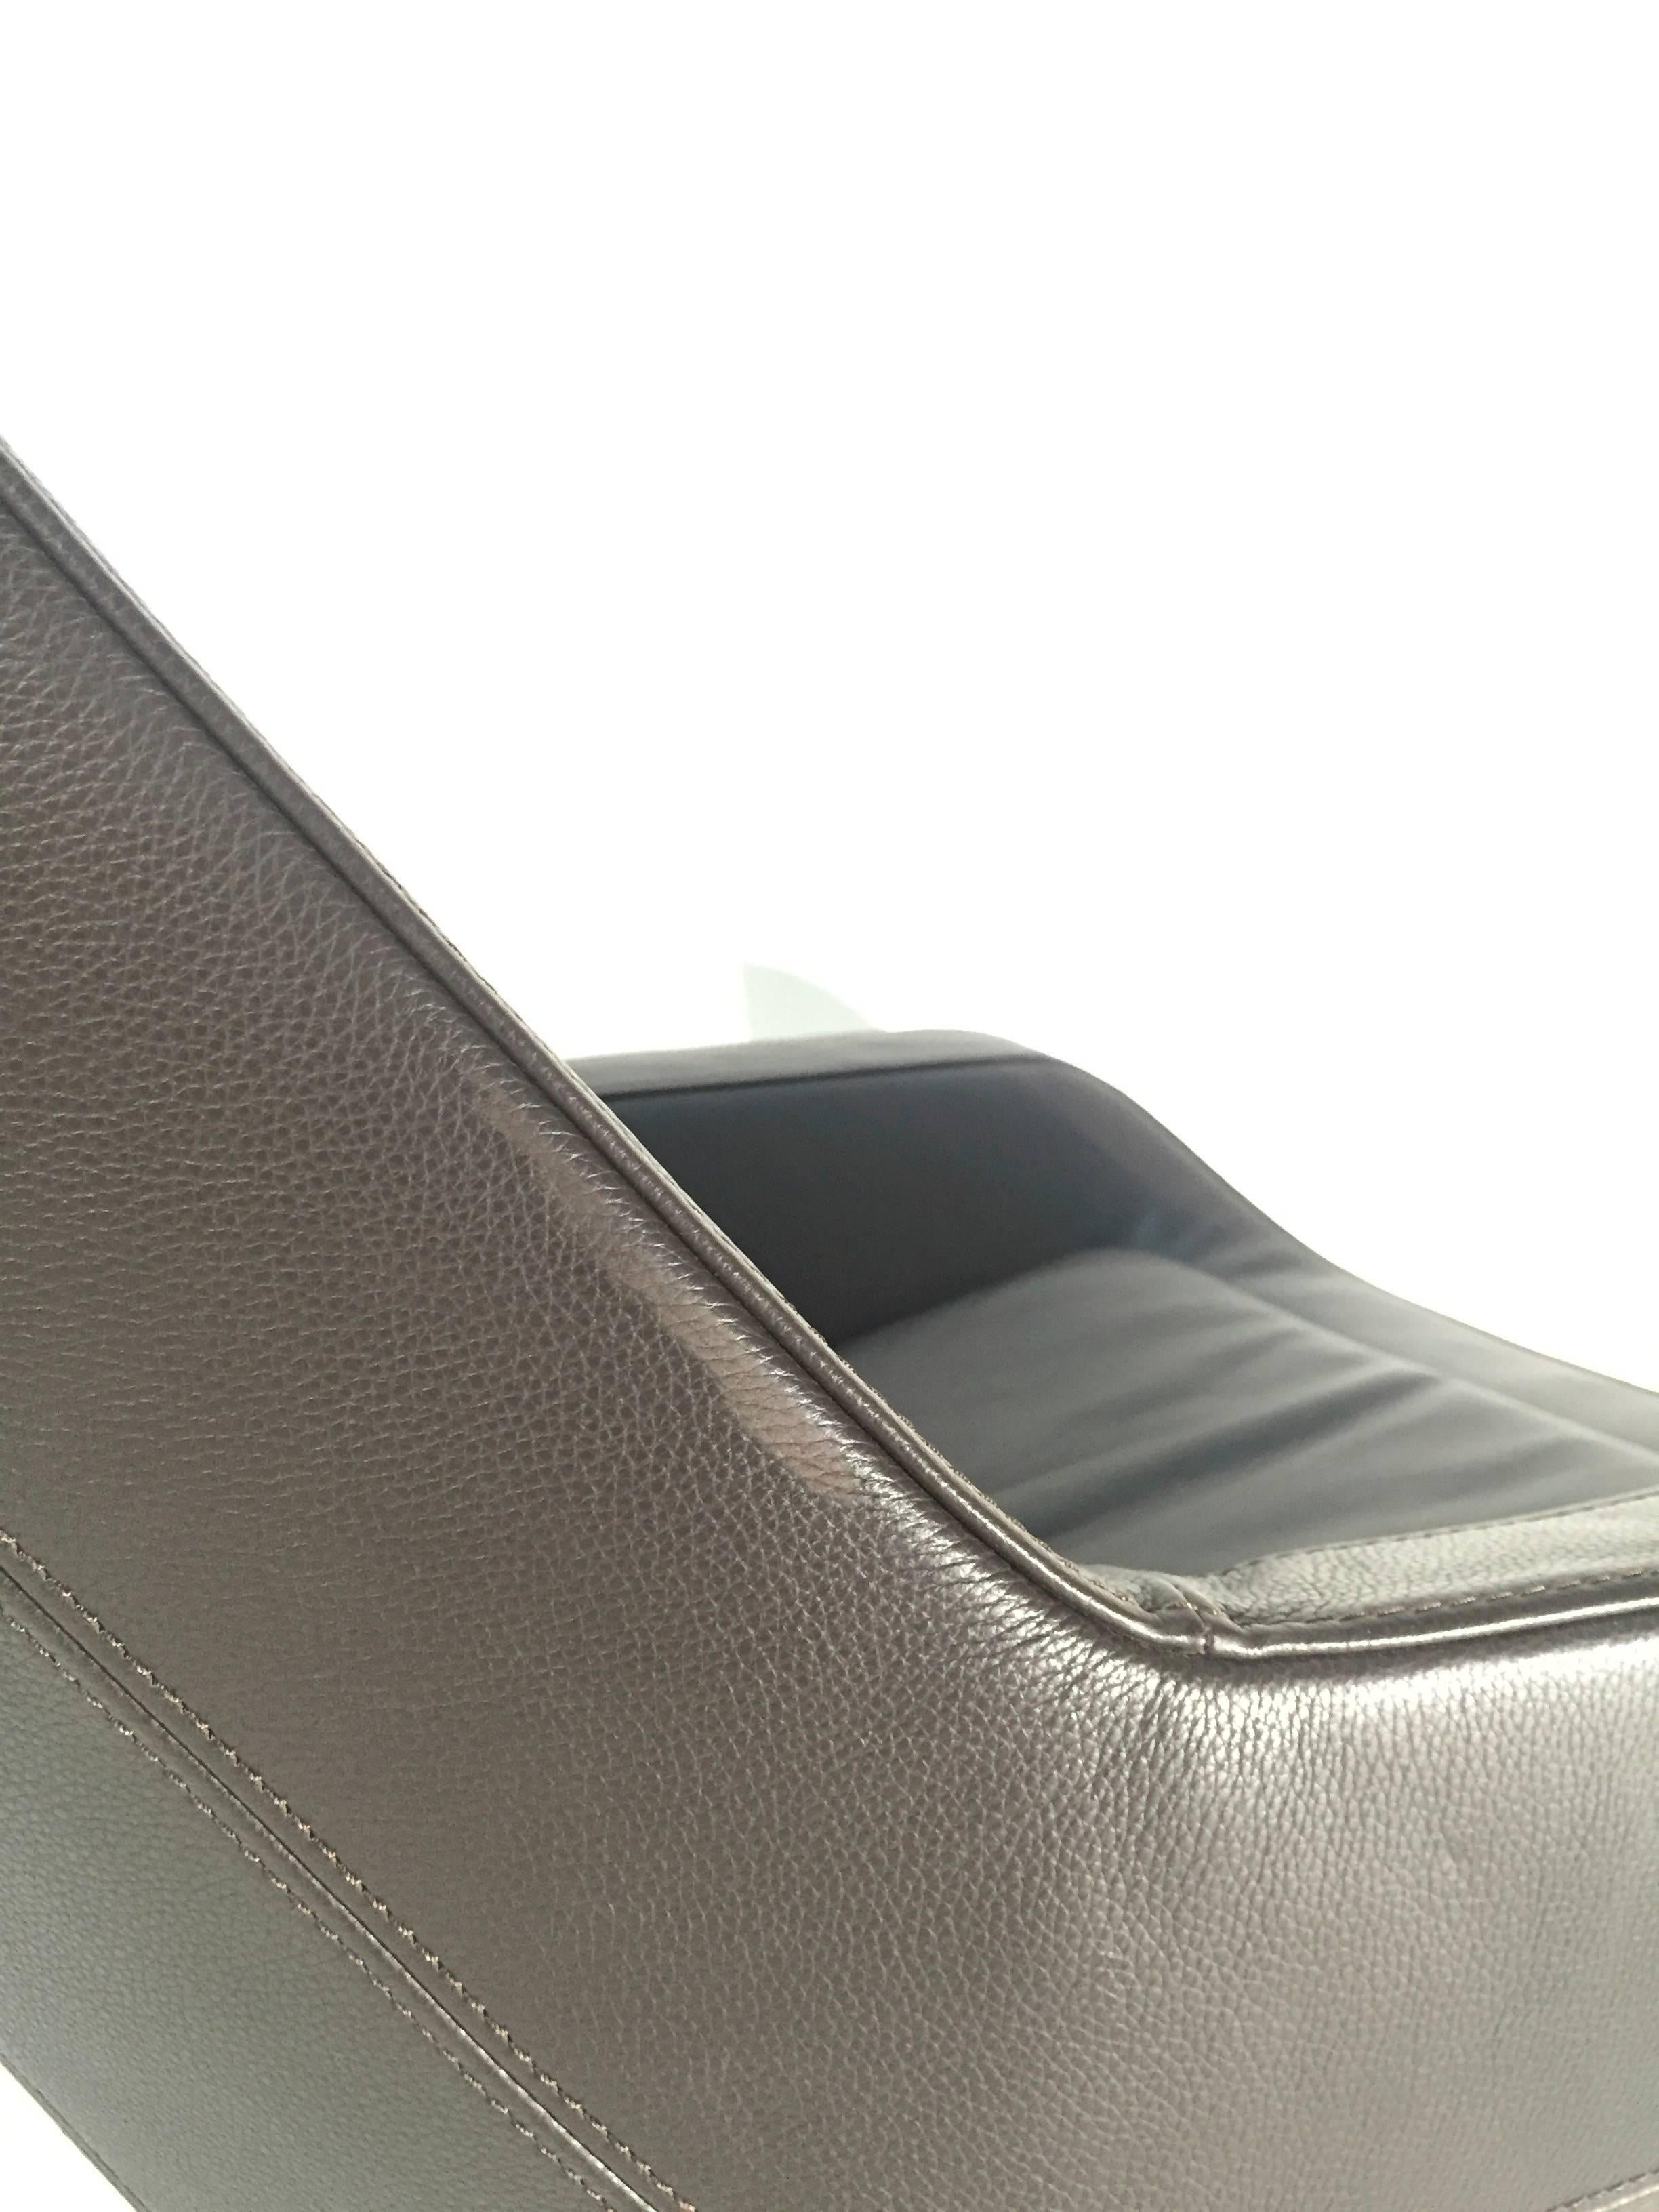 Contemporary De Sede DS-144 Armchair in Leather Select Cigarro